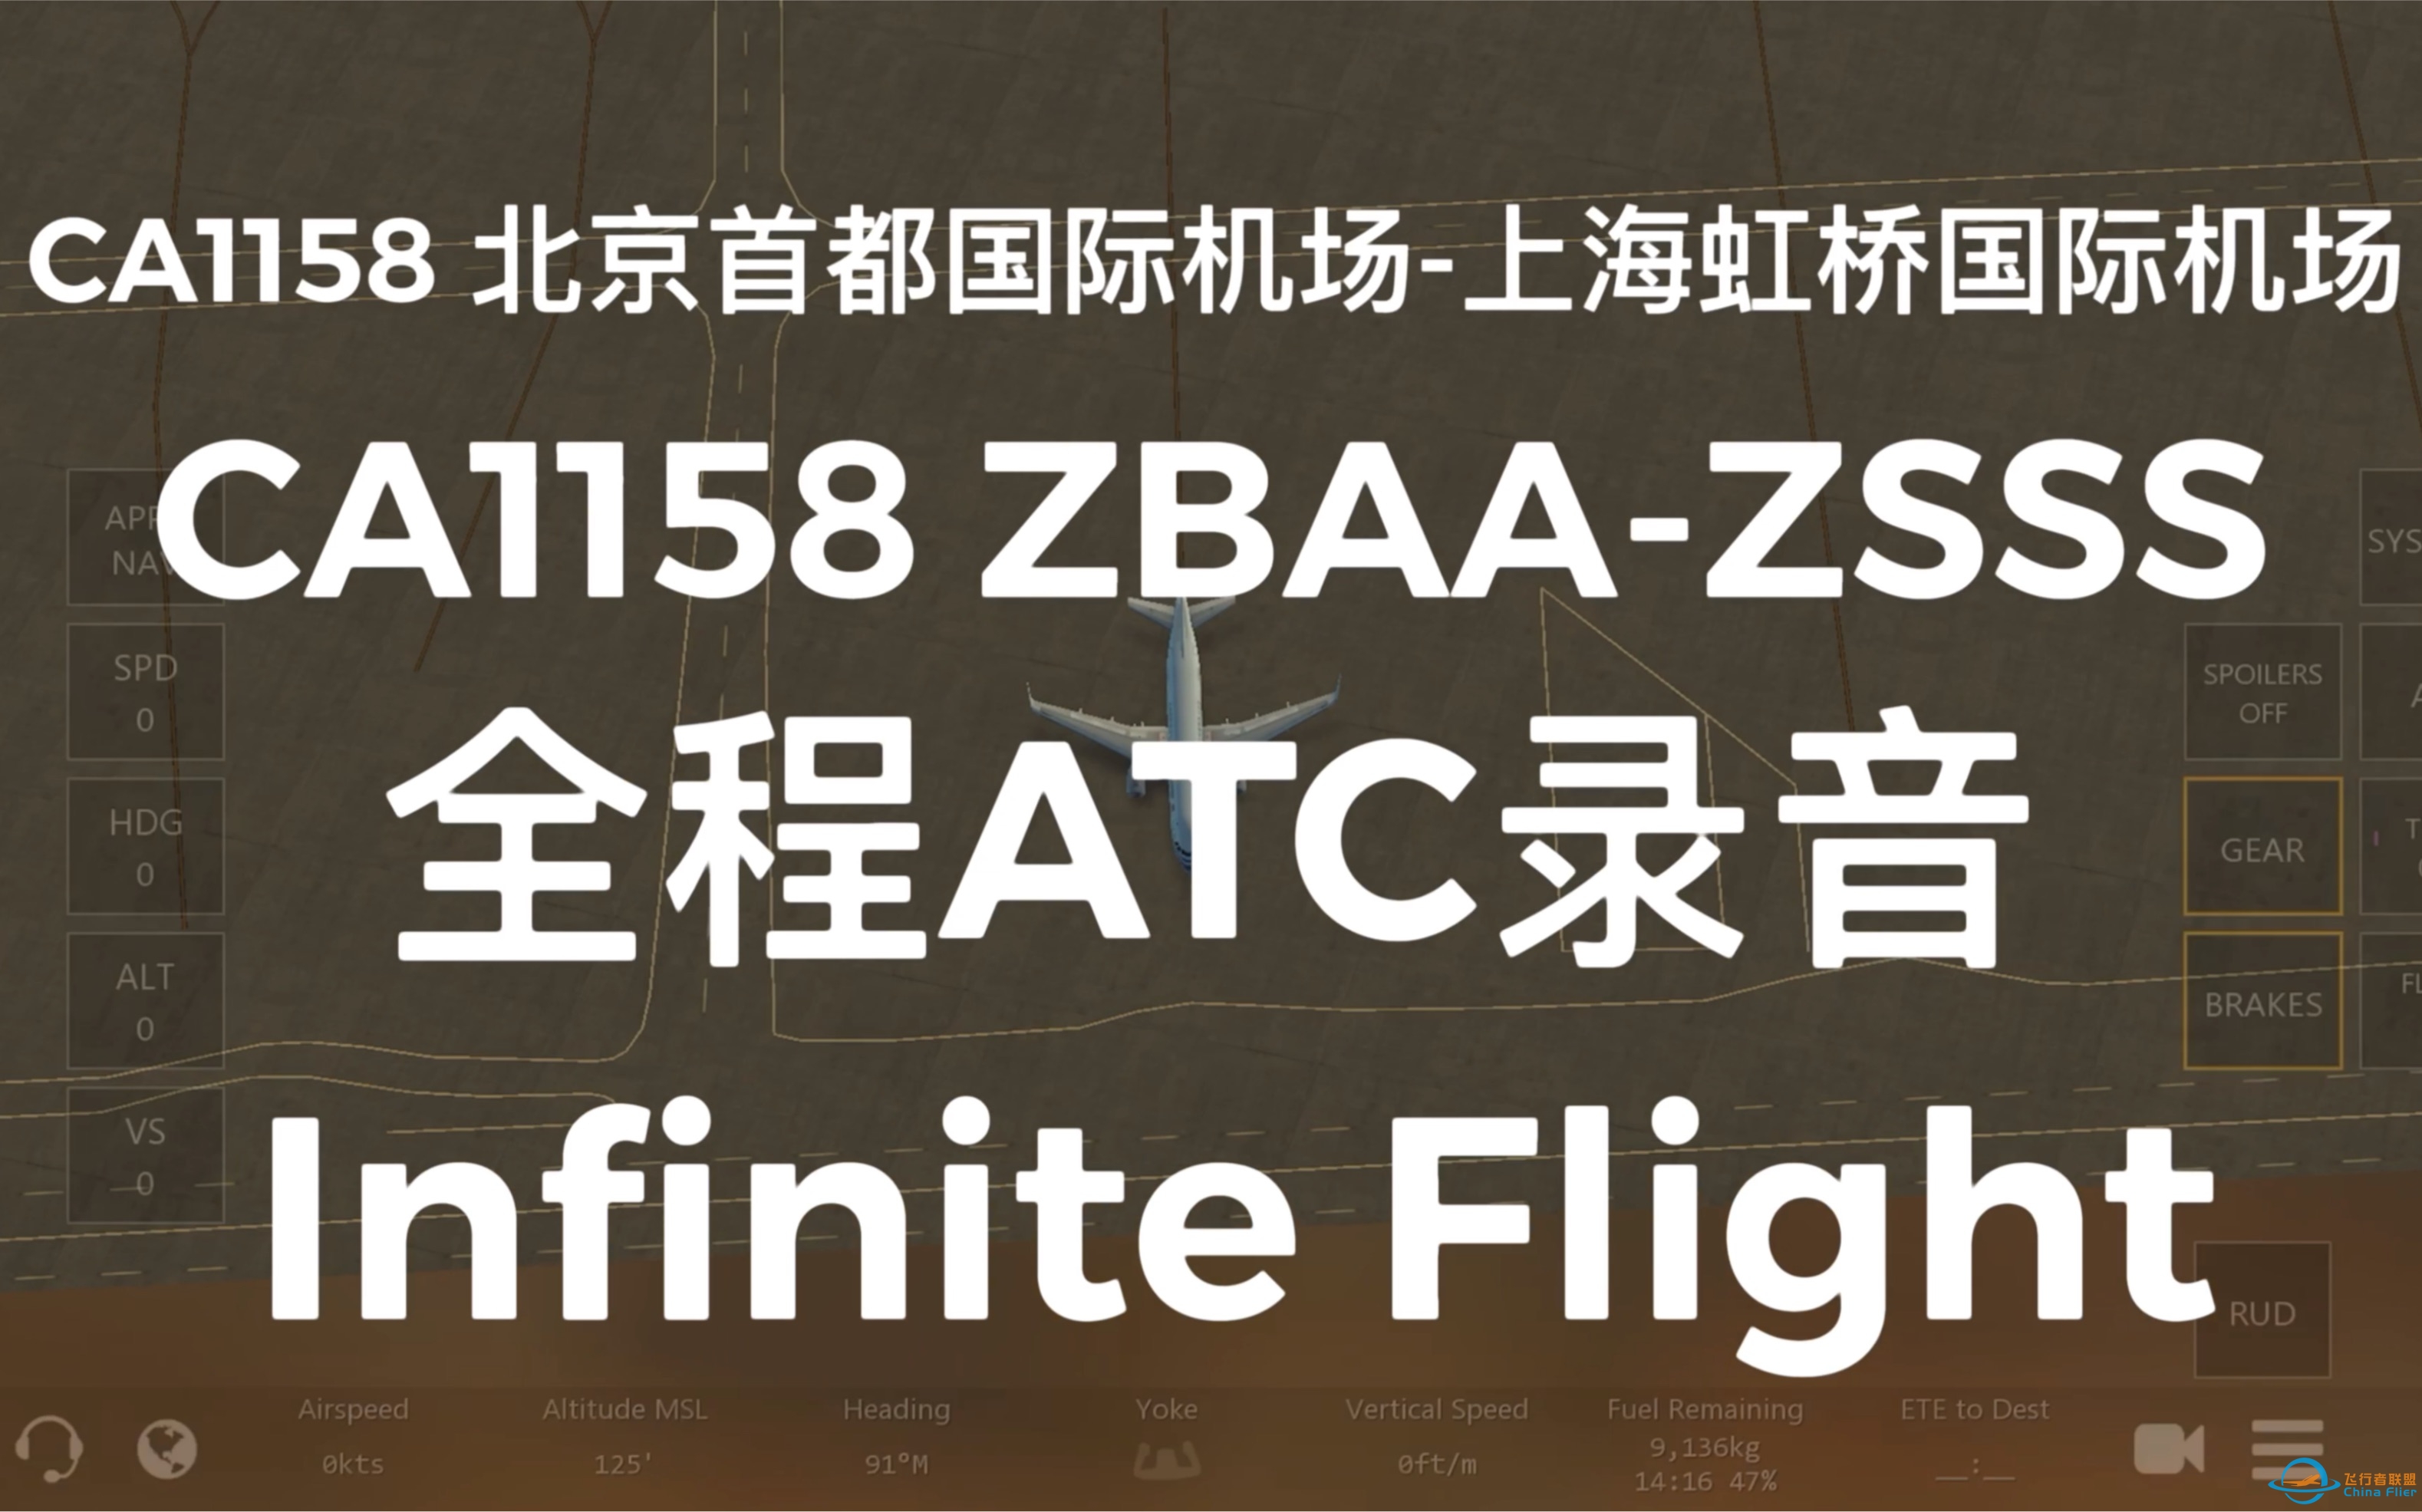 Infinite Flight CCA1158 北京首都PEK-上海虹桥SHA 飞行实录 （全程ATC录音）Part 1-1997 